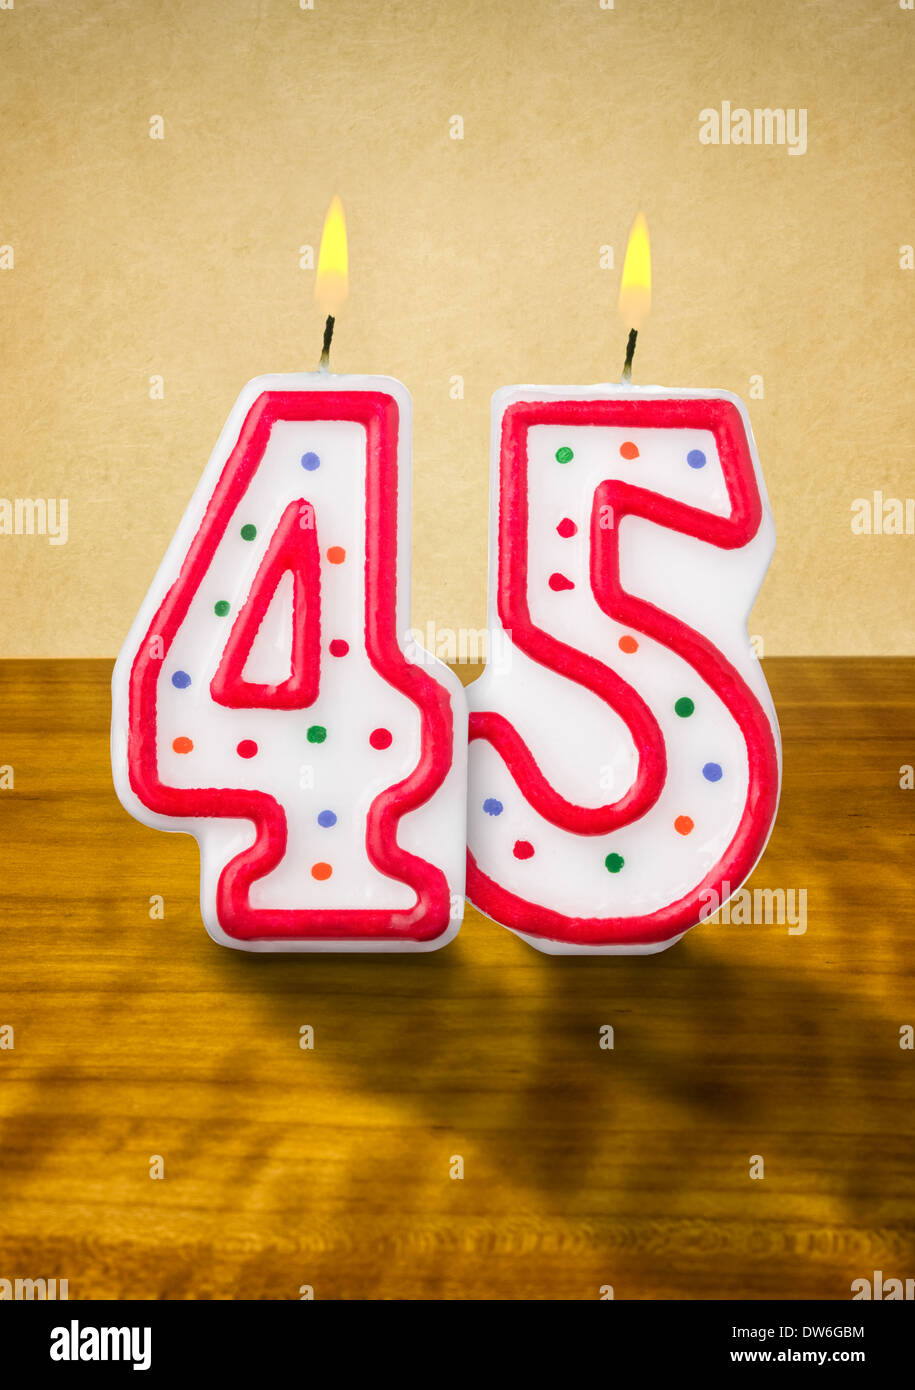 Burning birthday candles number 45 Stock Photo - Alamy